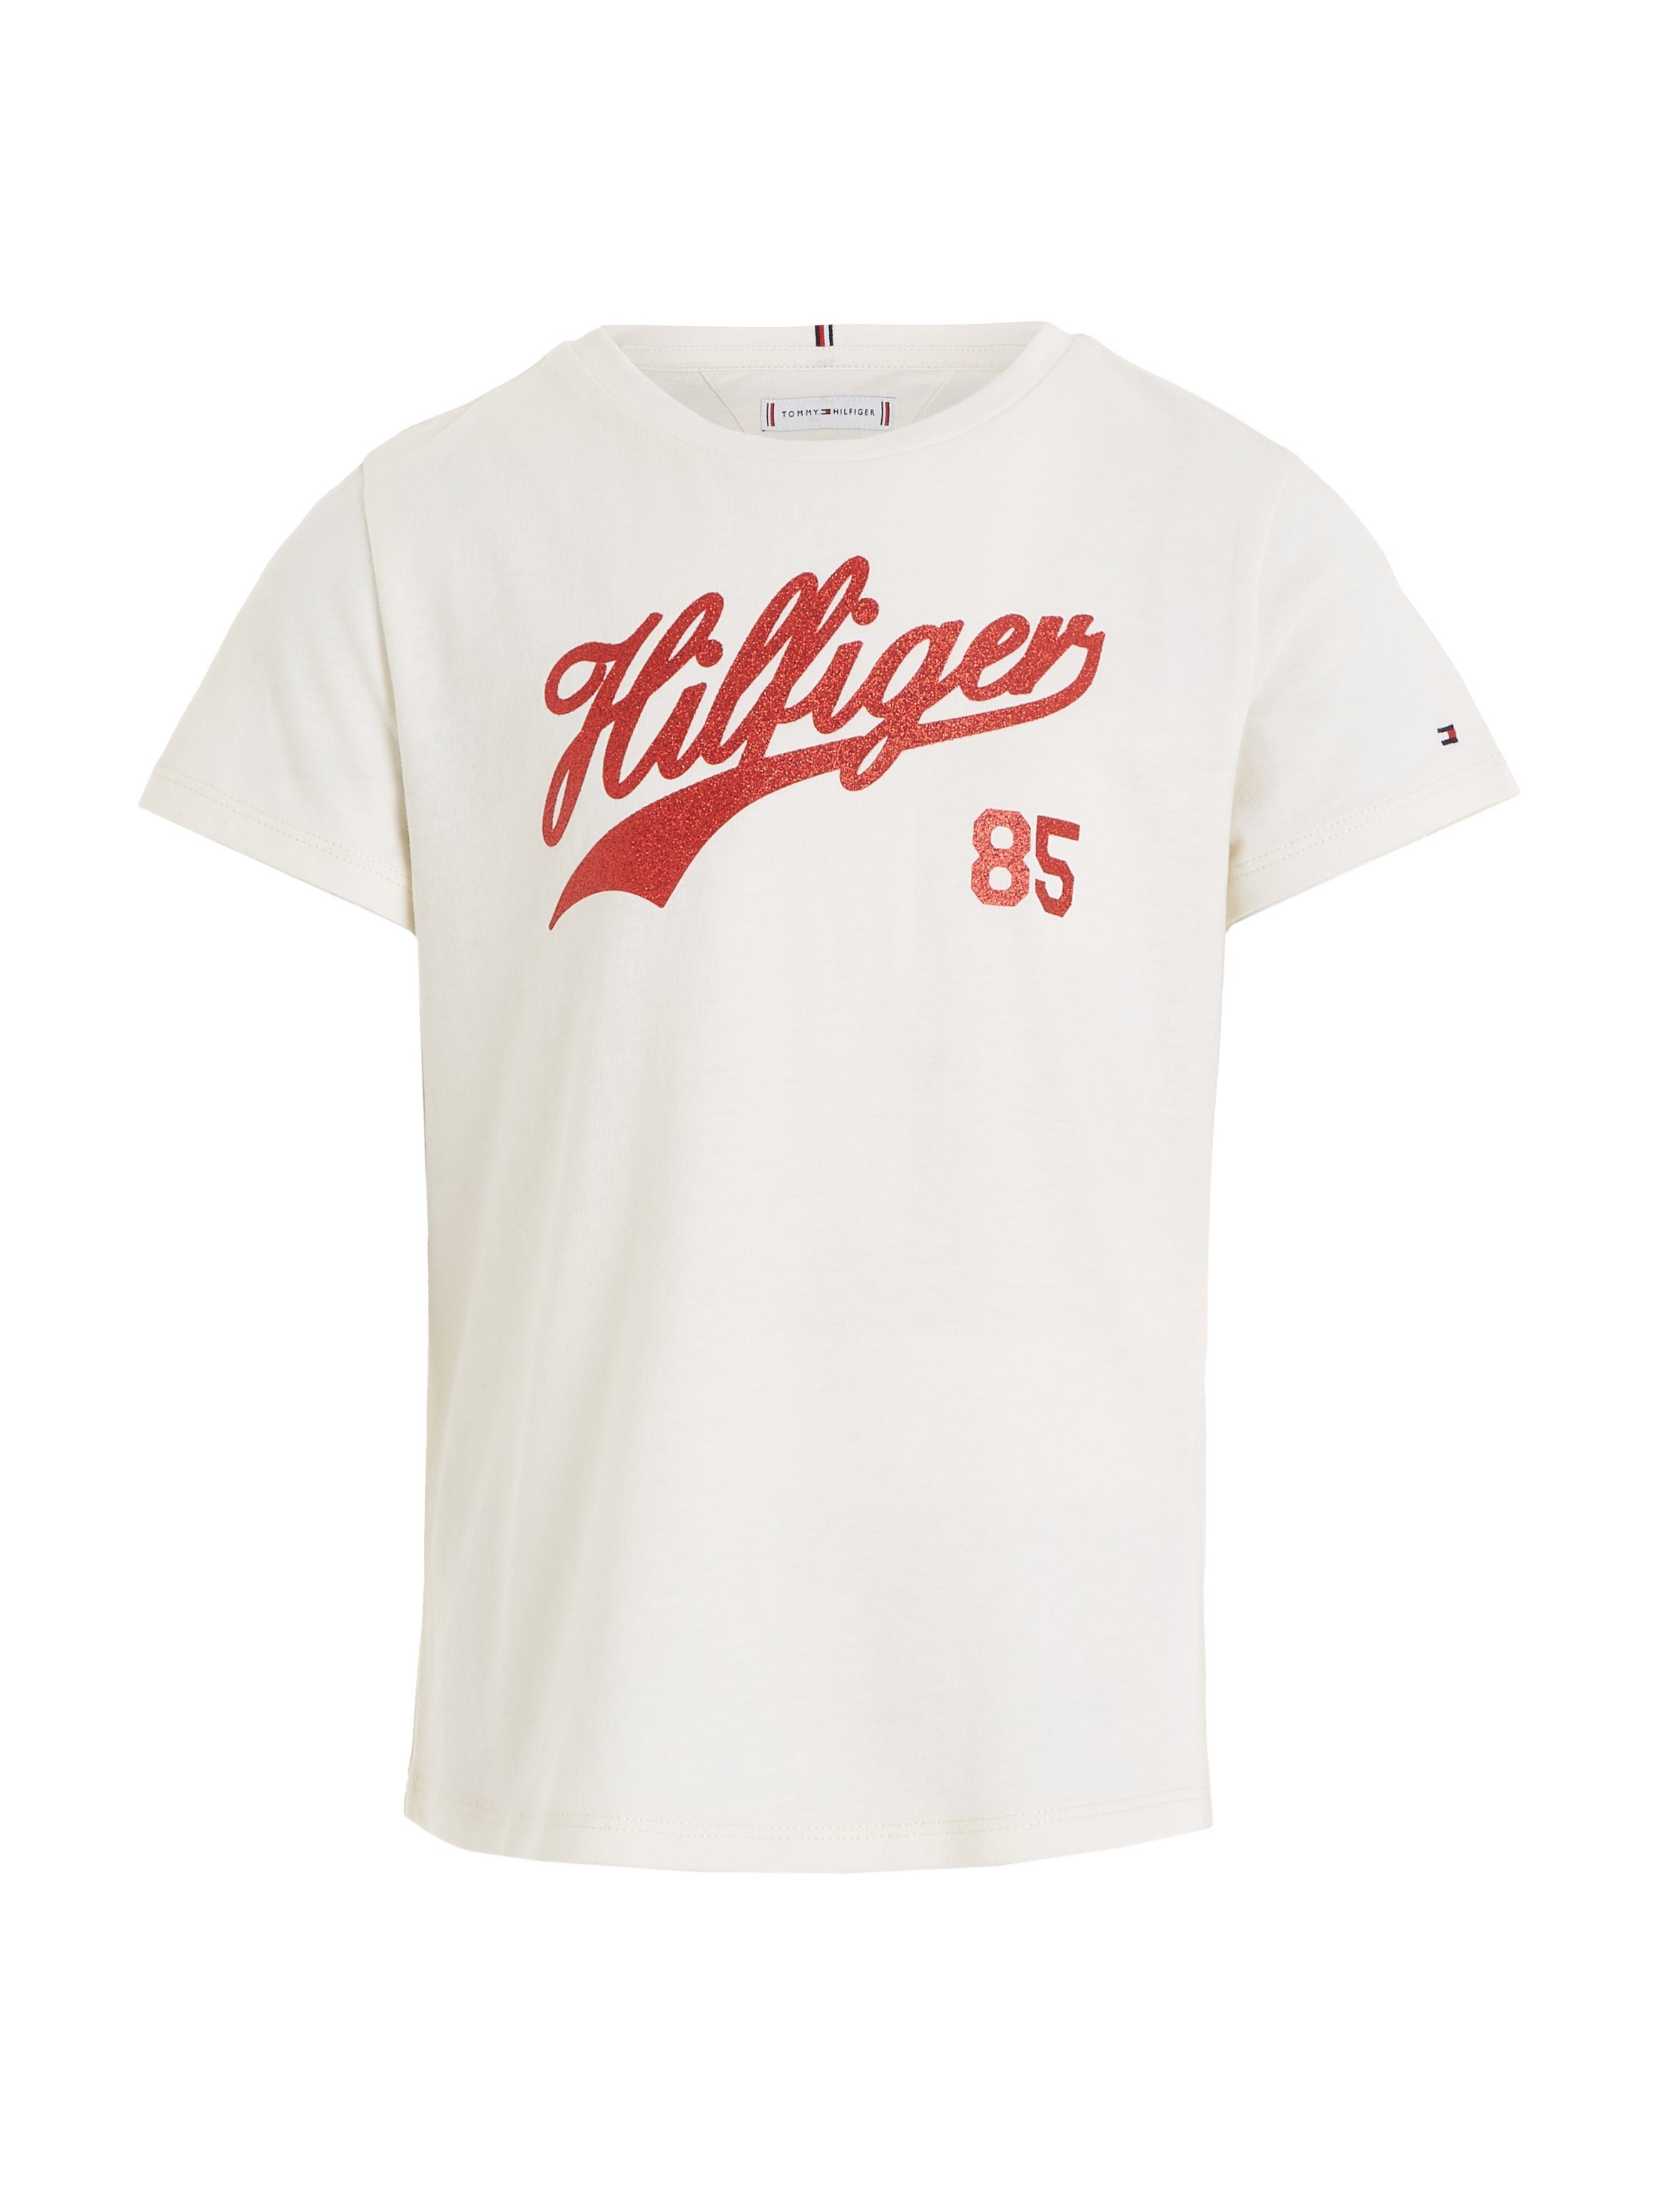 S/S Tommy TEE HILFIGER Hilfiger Calico Hilfiger mit T-Shirt SCRIPT Logo-Print